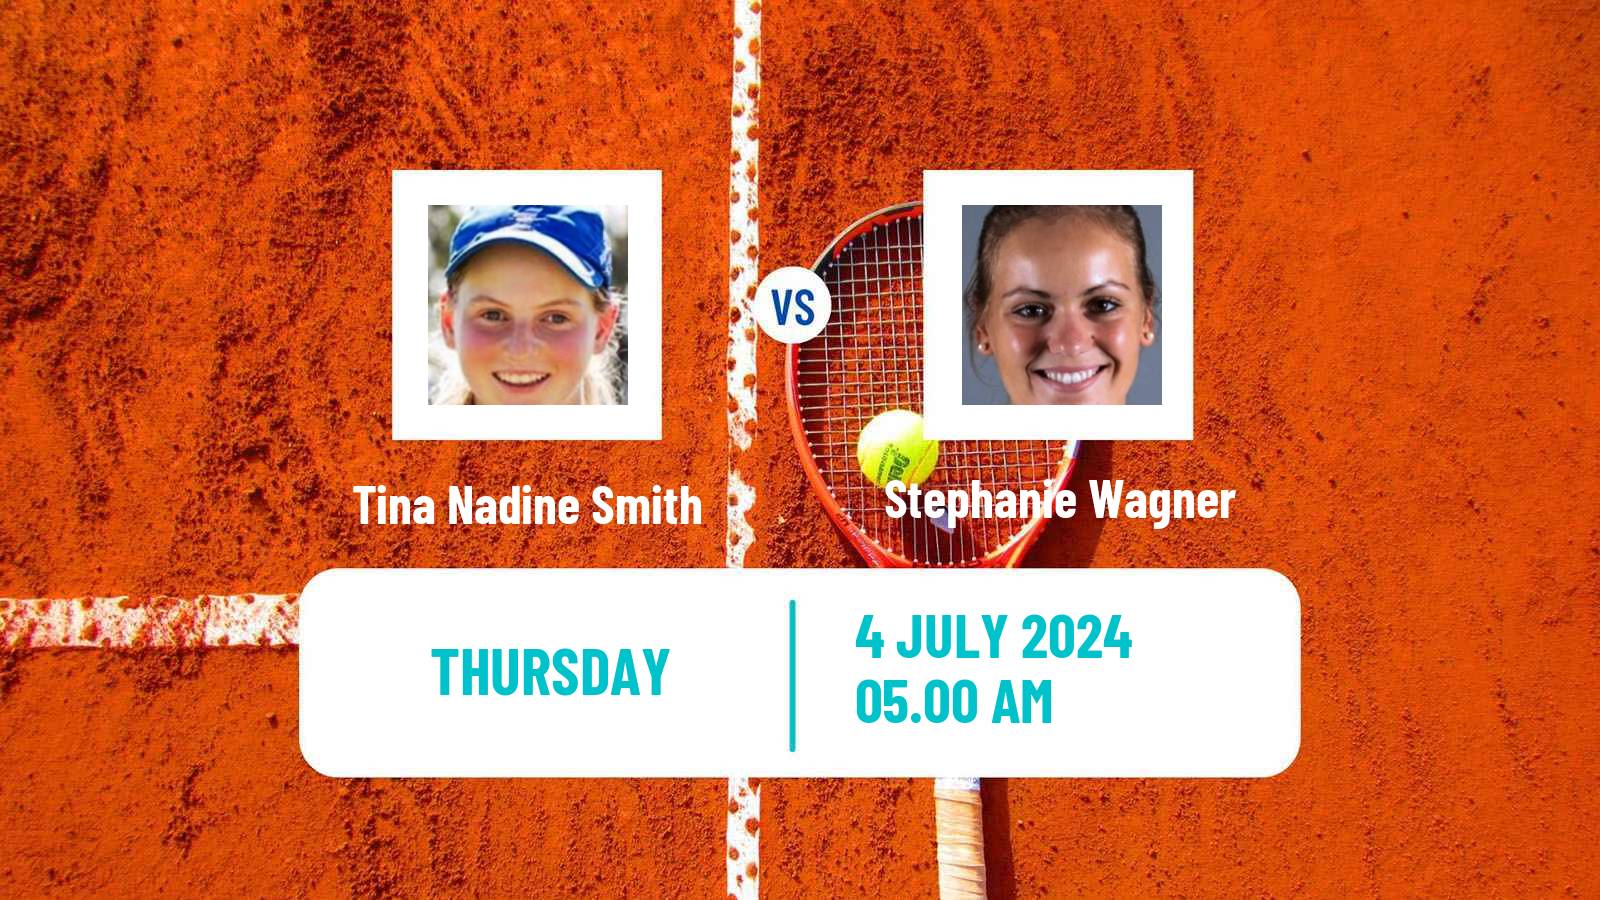 Tennis ITF W35 Stuttgart Vaihingen Women Tina Nadine Smith - Stephanie Wagner